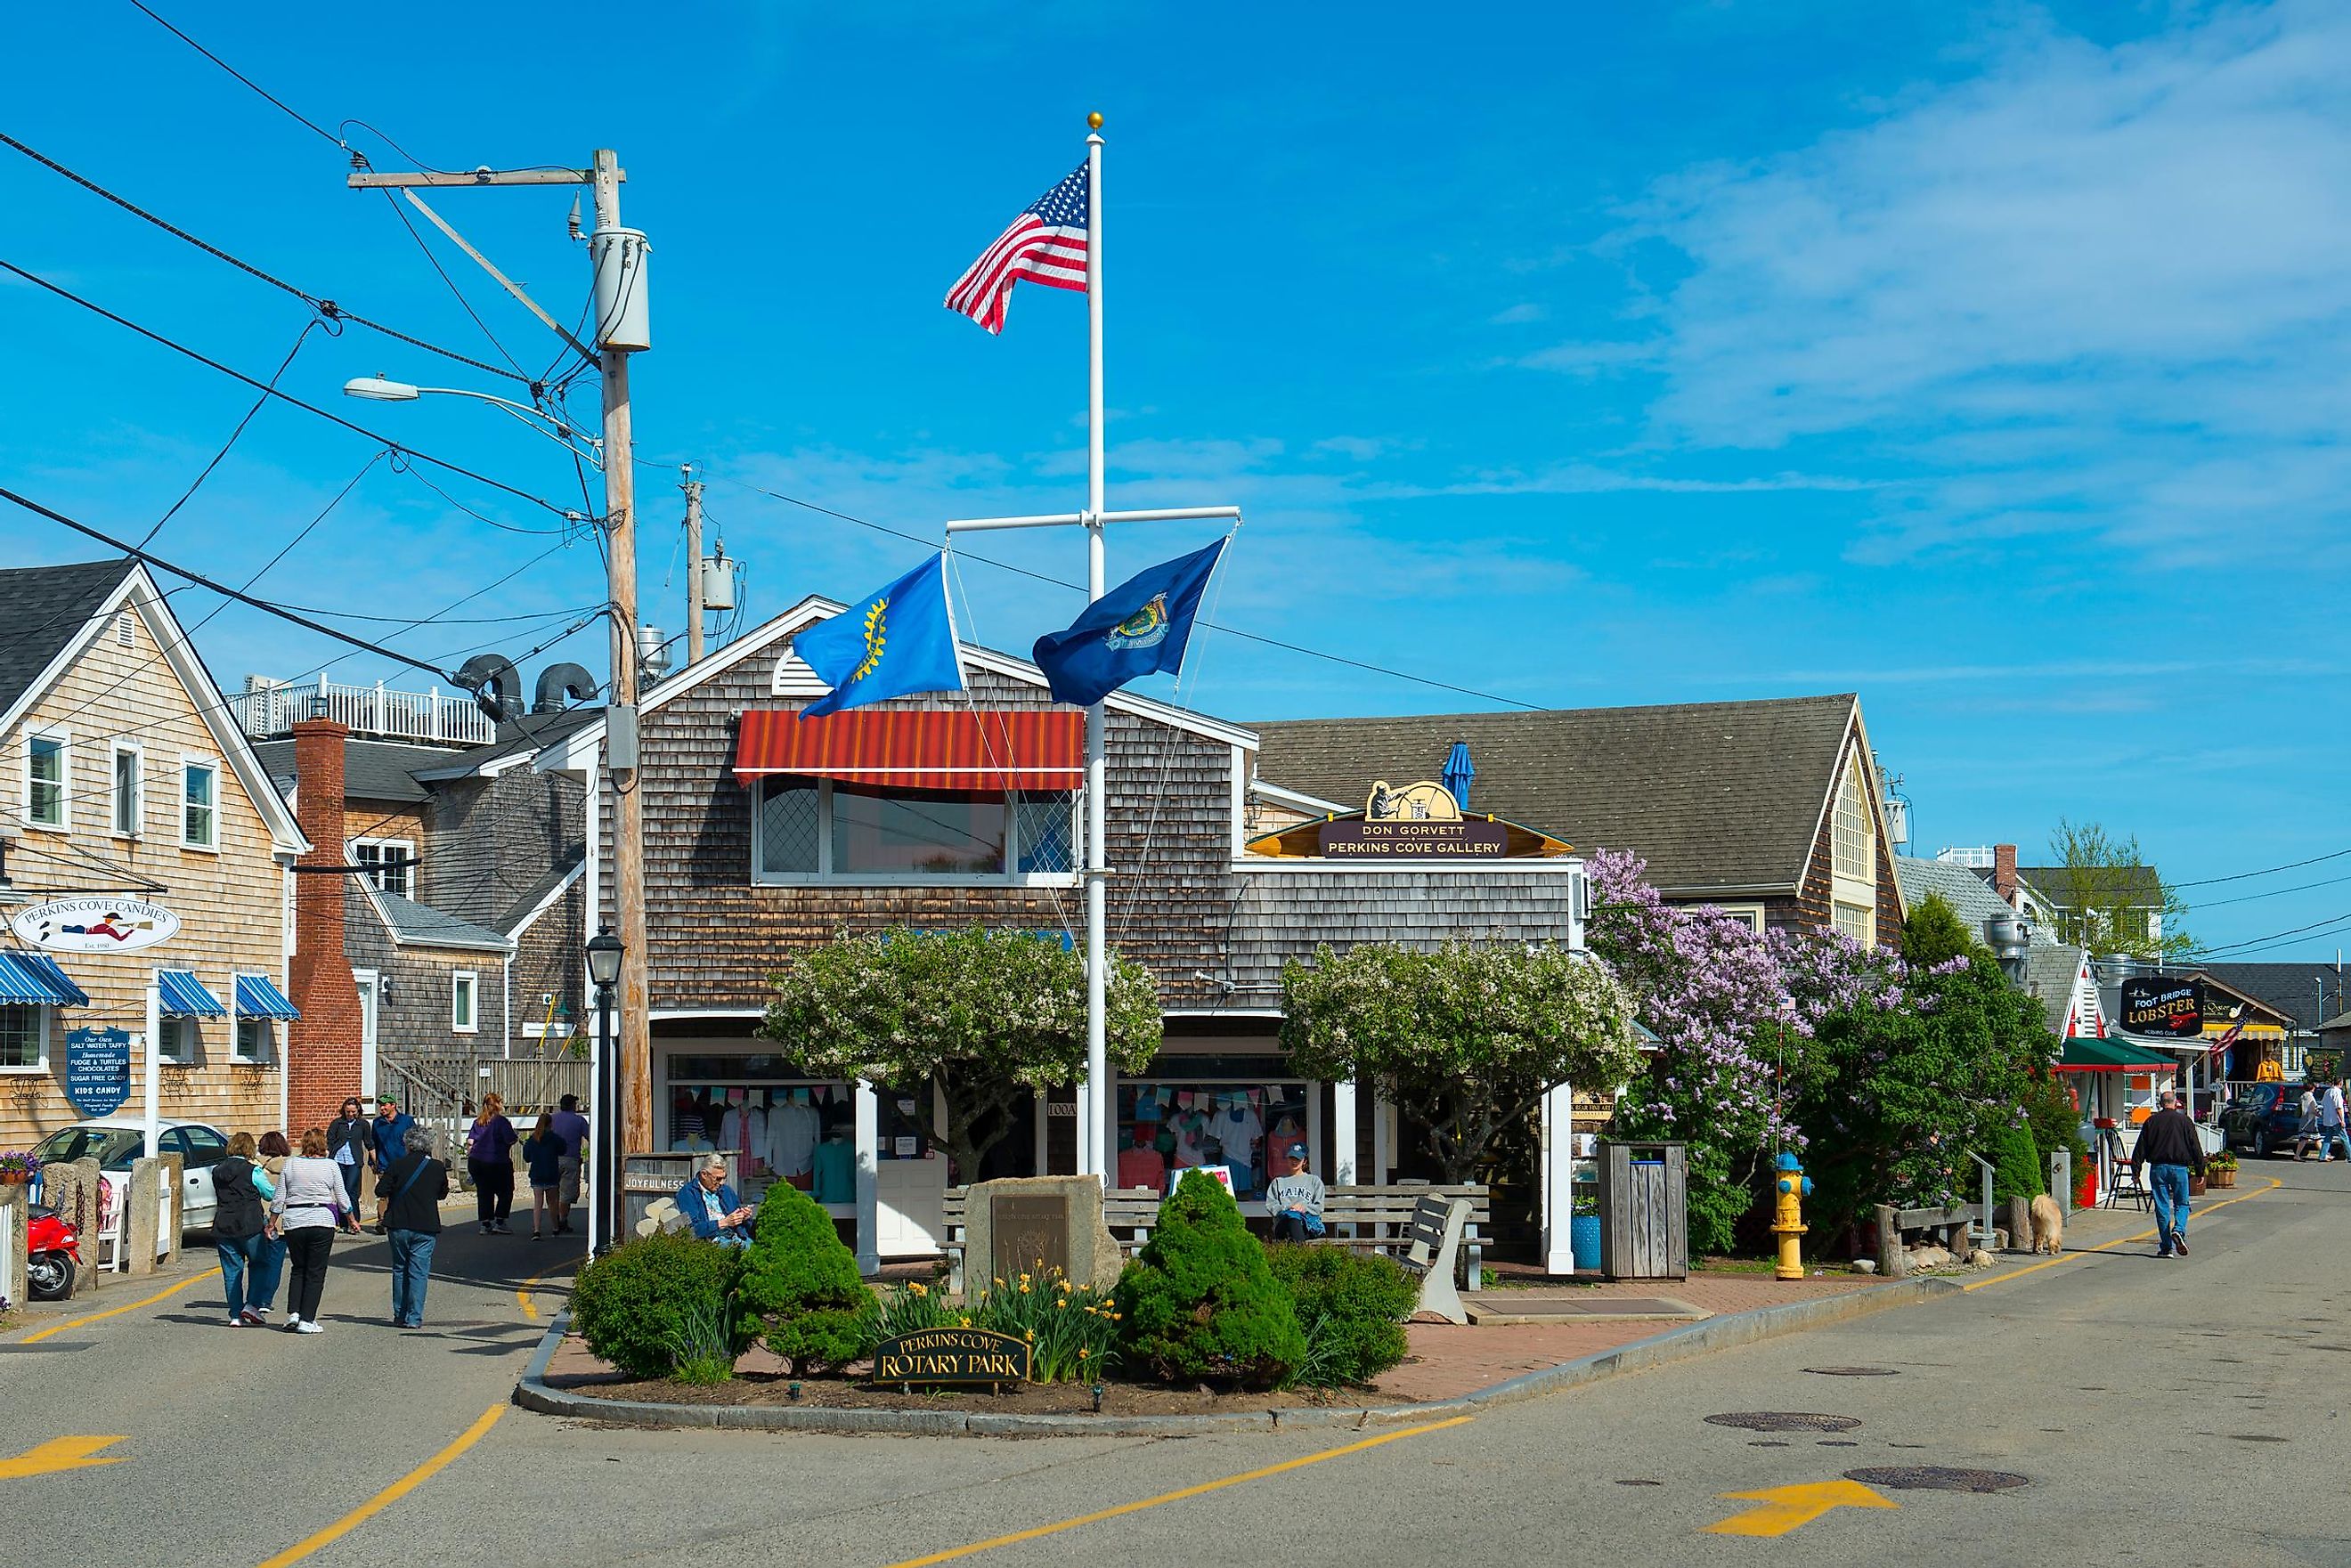 Historic buildings and shops in Perkins Cove in Ogunquit, Maine, via Wangkun Jia / Shutterstock.com